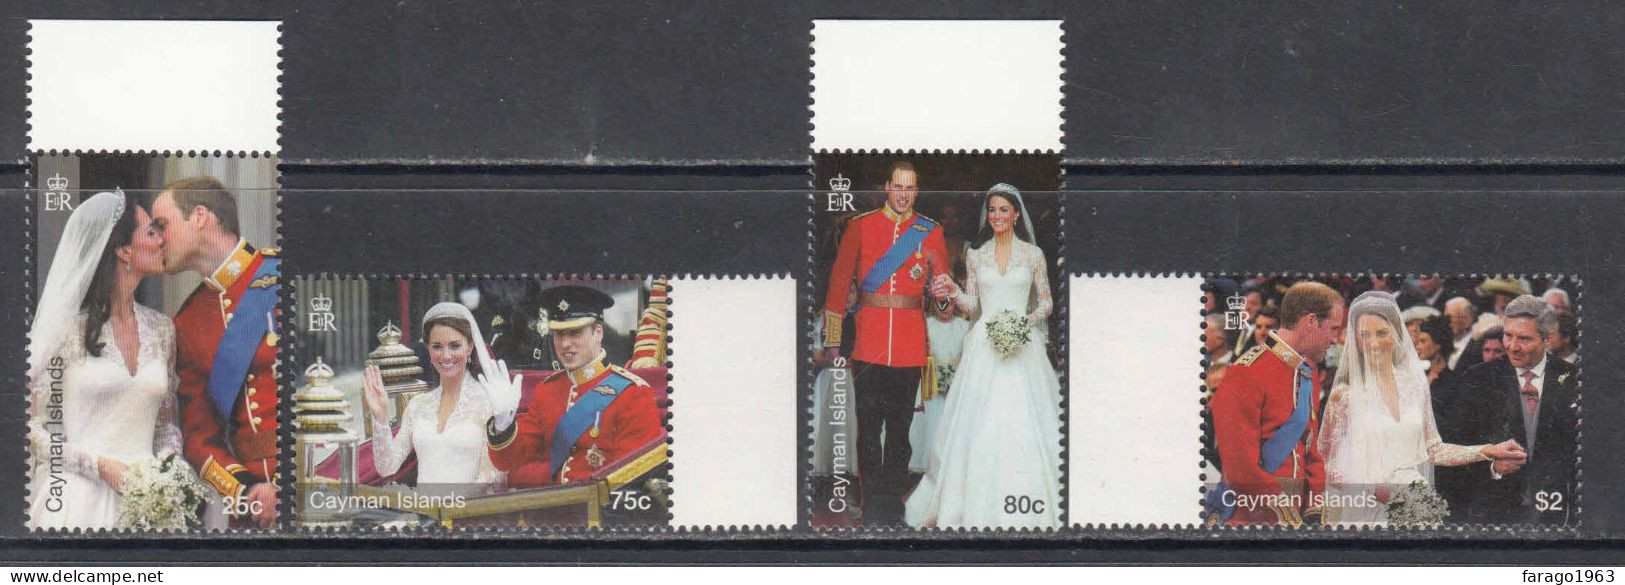 2011 Cayman Islands Royal Wedding William & Kate  Complete Set Of 4 MNH @ BELOW FACE VALUE - Cayman Islands